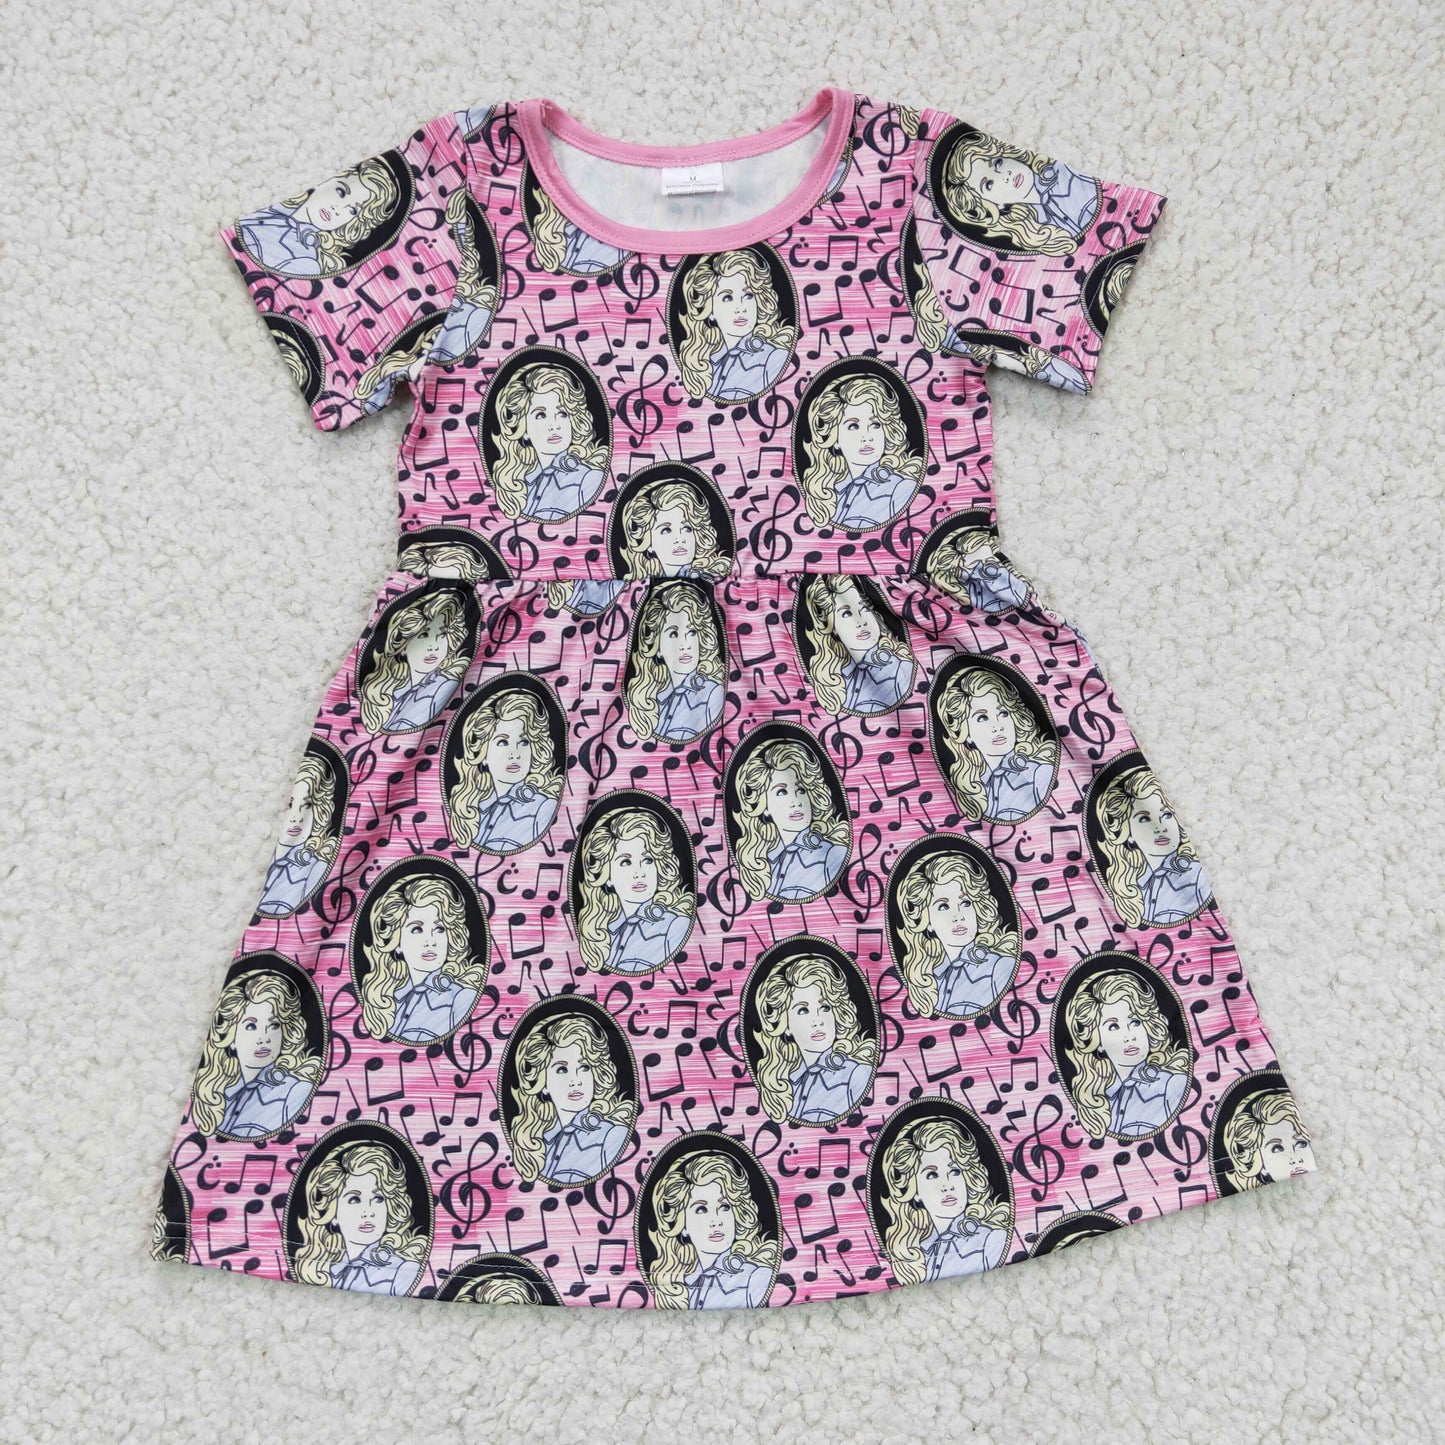 rts no moq GSD0180 baby clothing short sleeve cartoon print kids dresses for girls milk silk